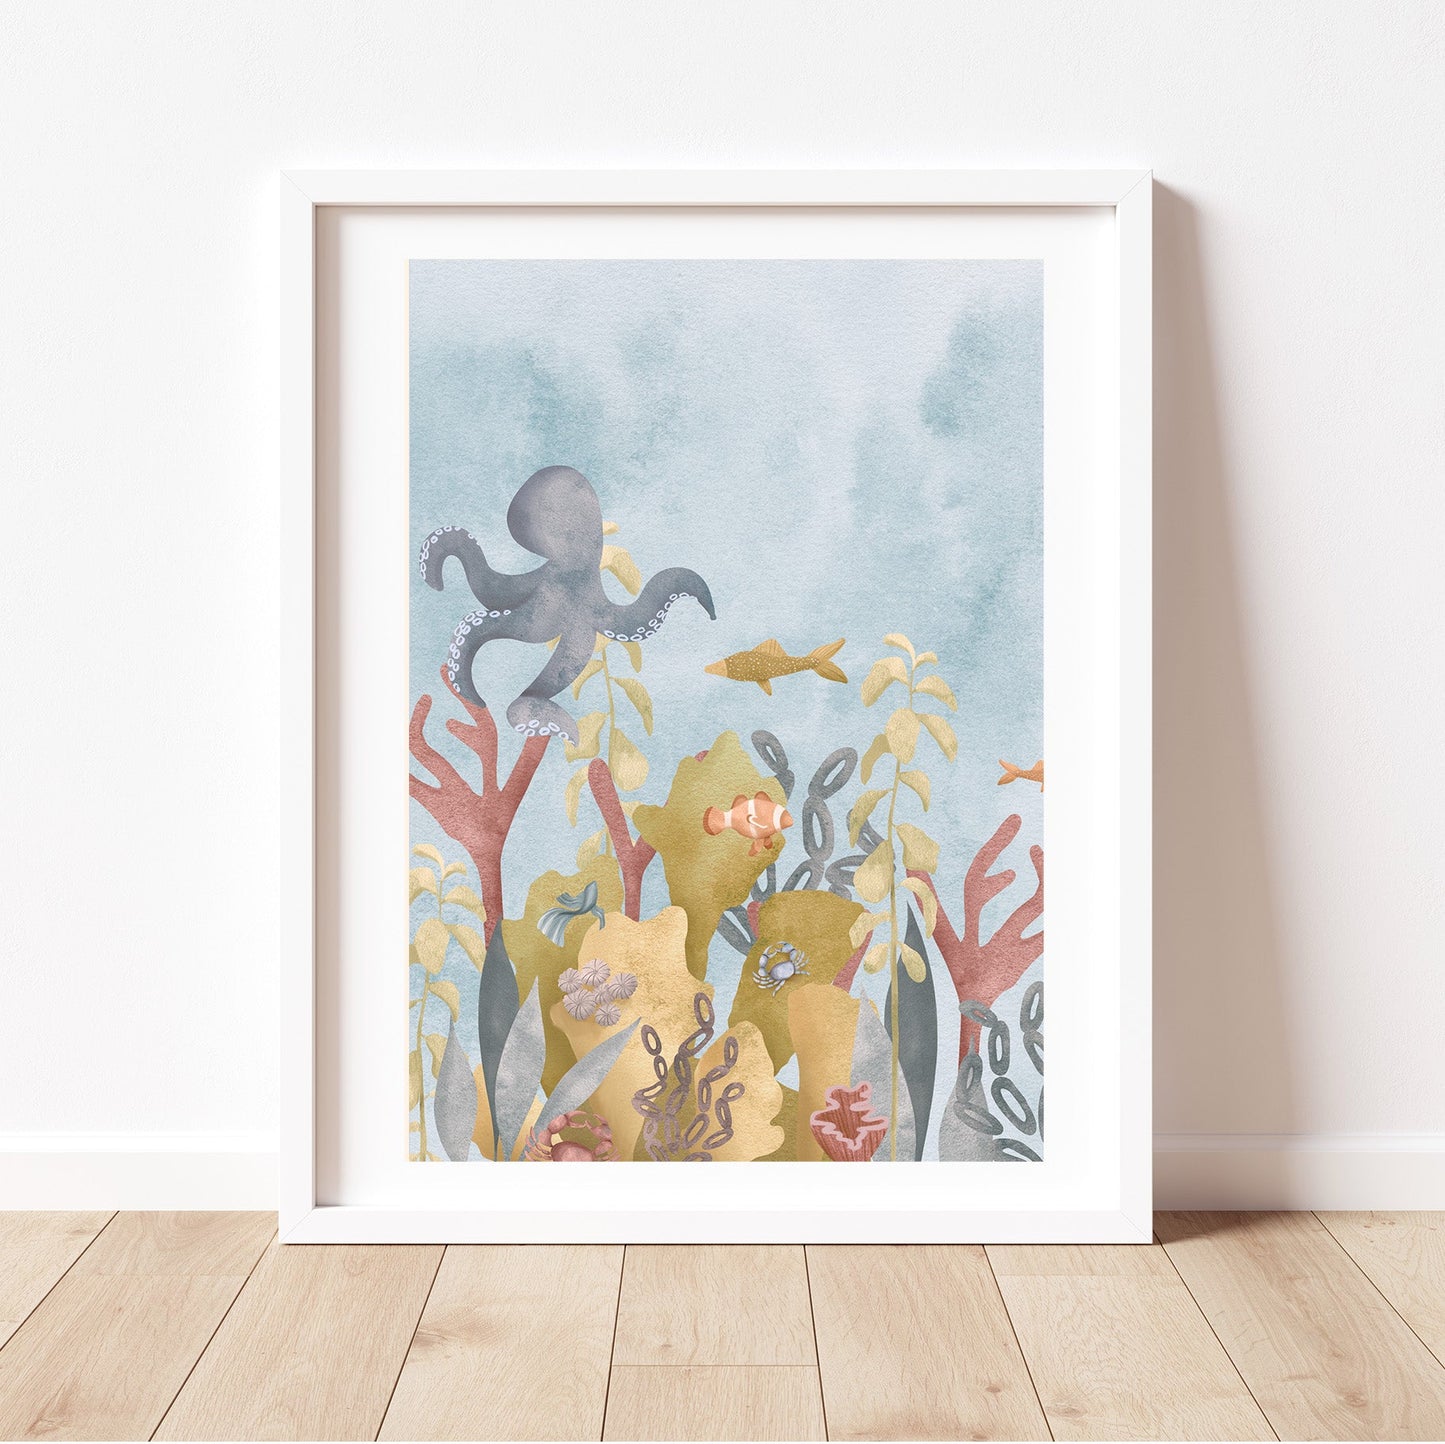 'Seafloor Symphony' | Set of 3 Under the Sea Wall Art Prints